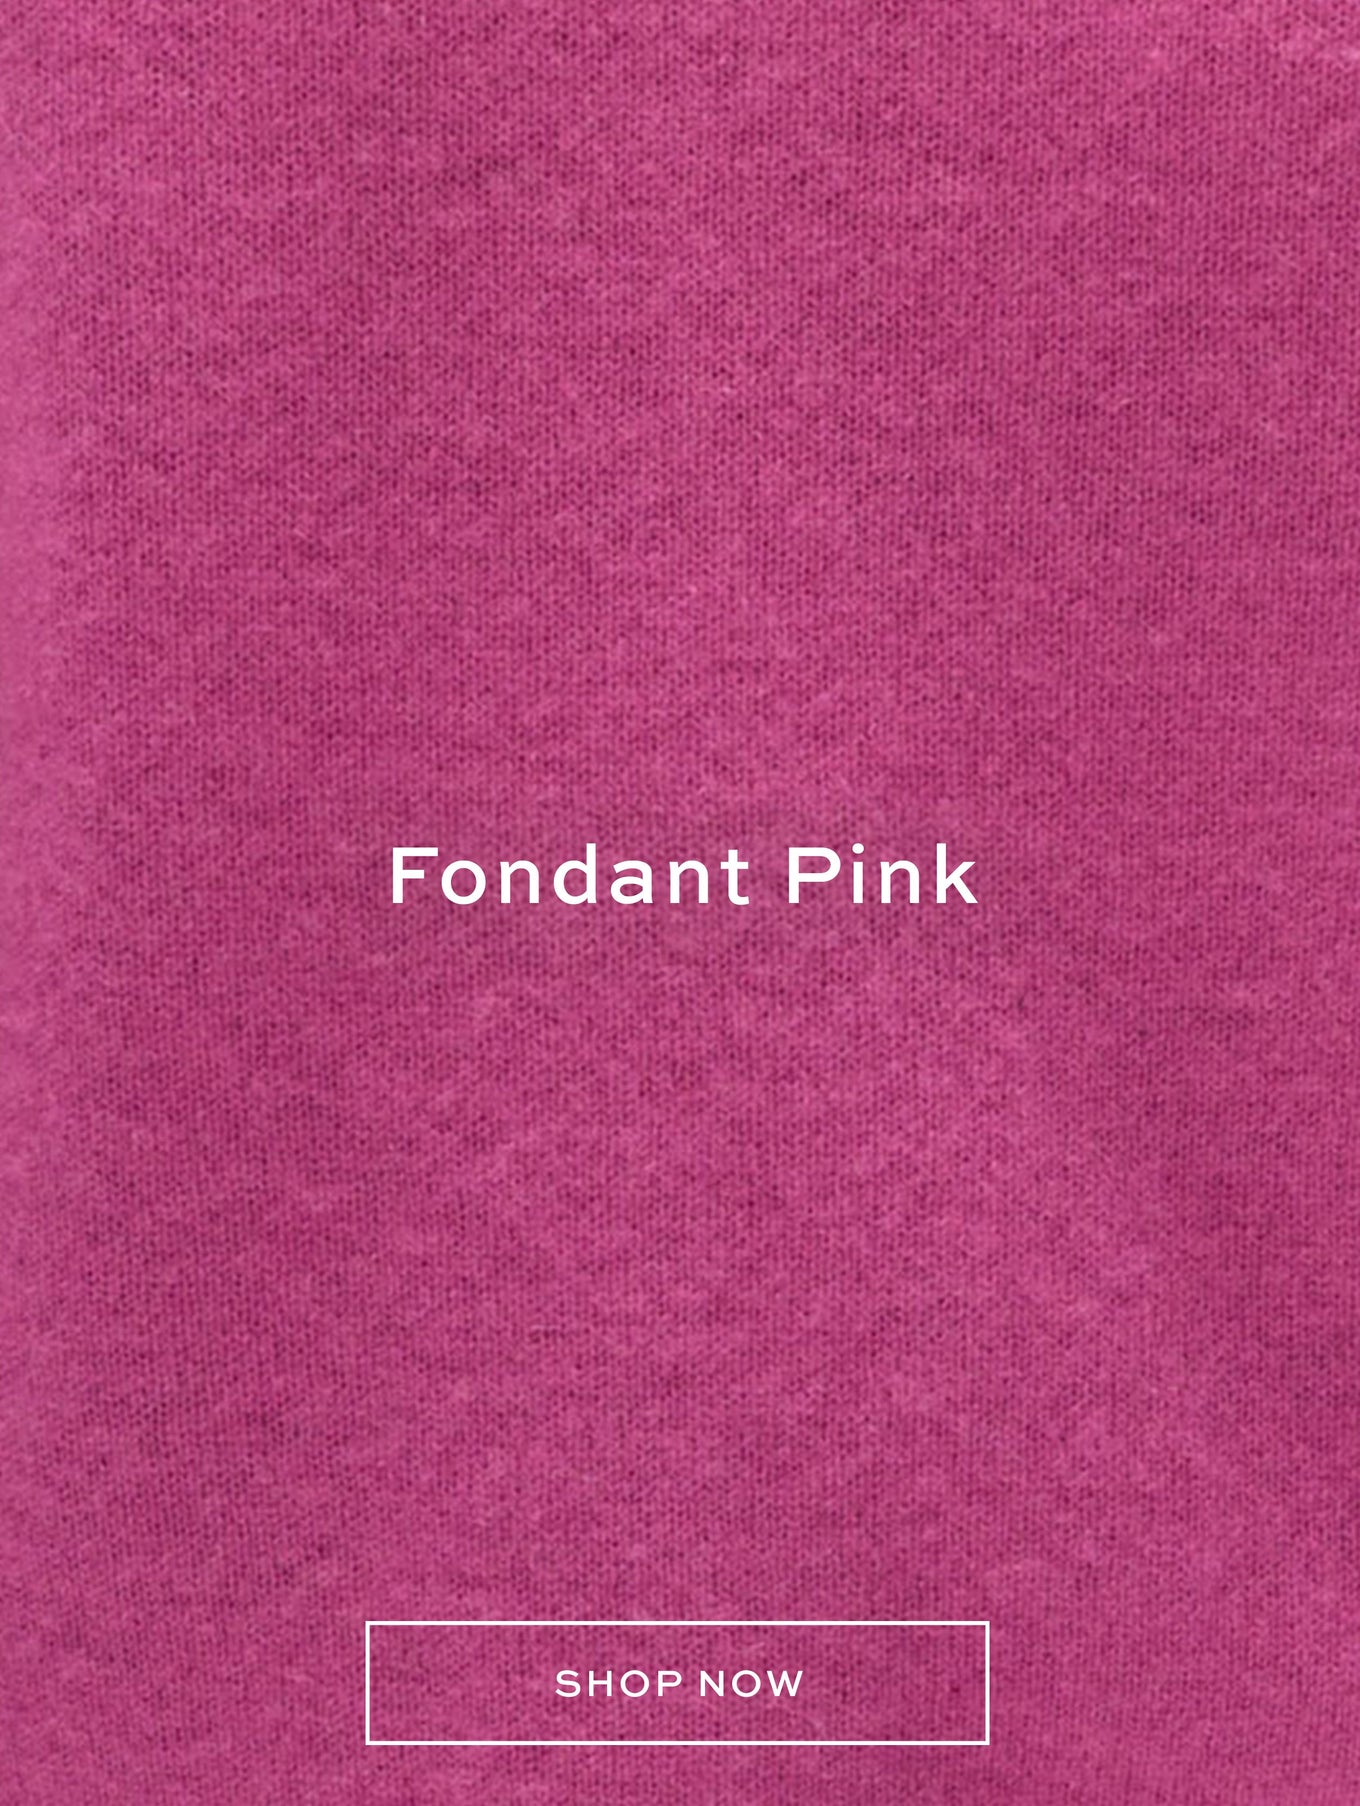 03.04 Single In-Grid - Fondant Pink